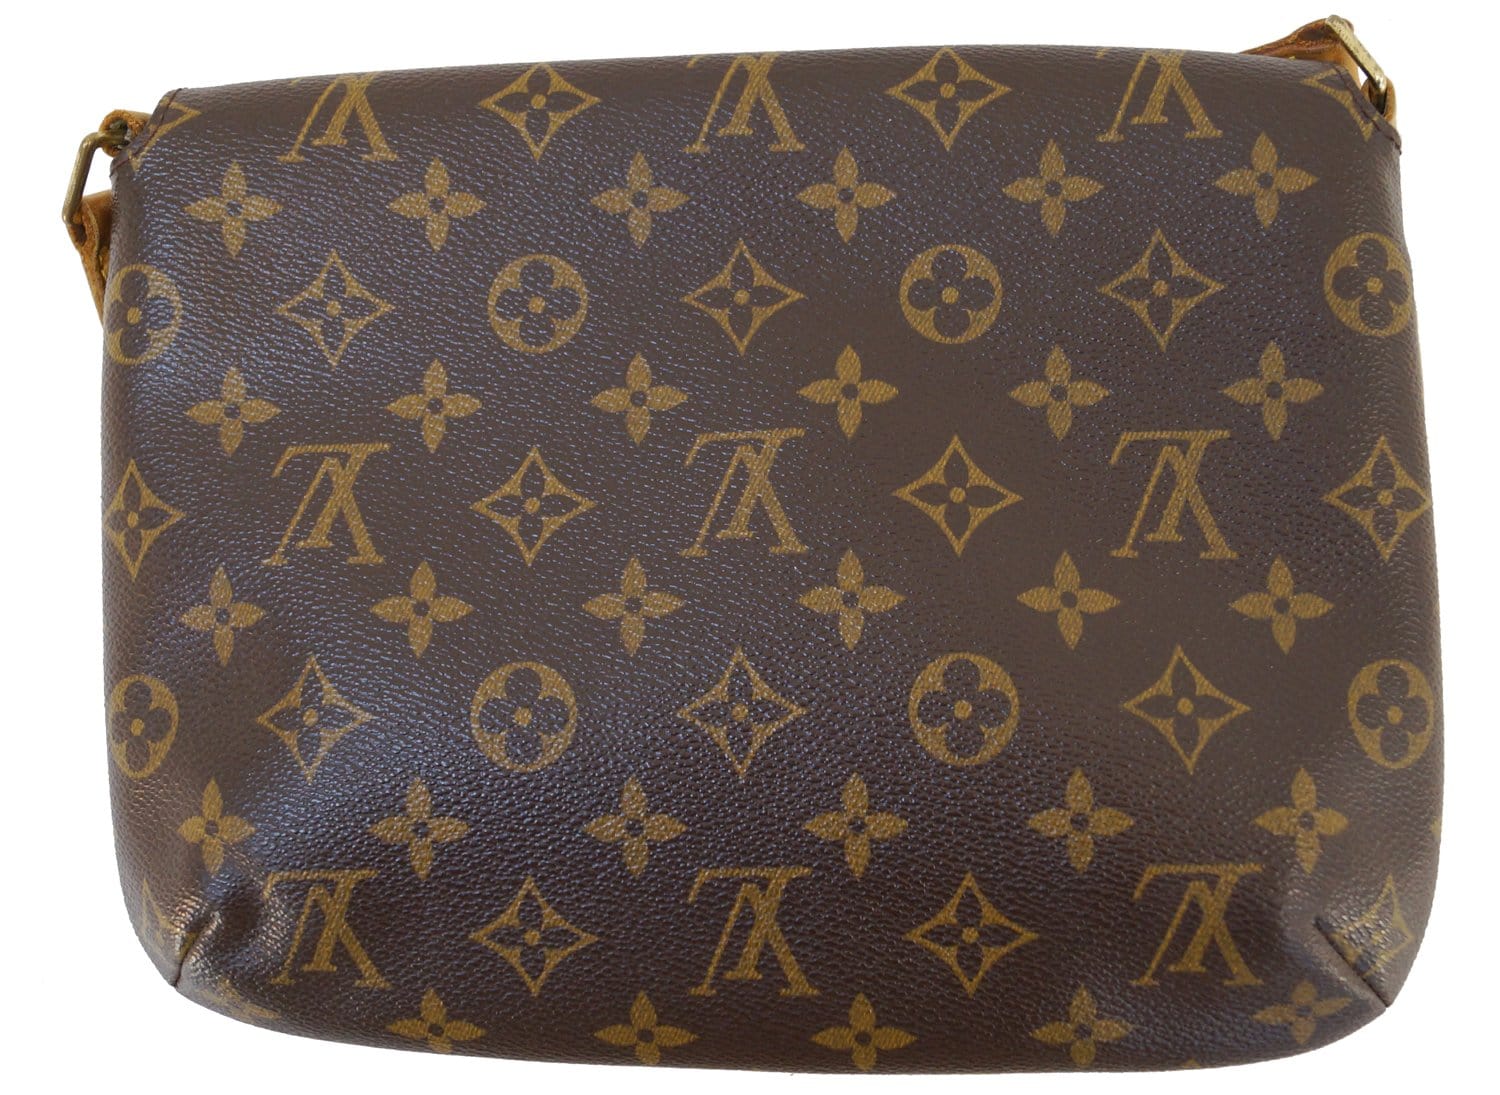 Authentic Louis Vuitton Musette Tango Crossbody Bag